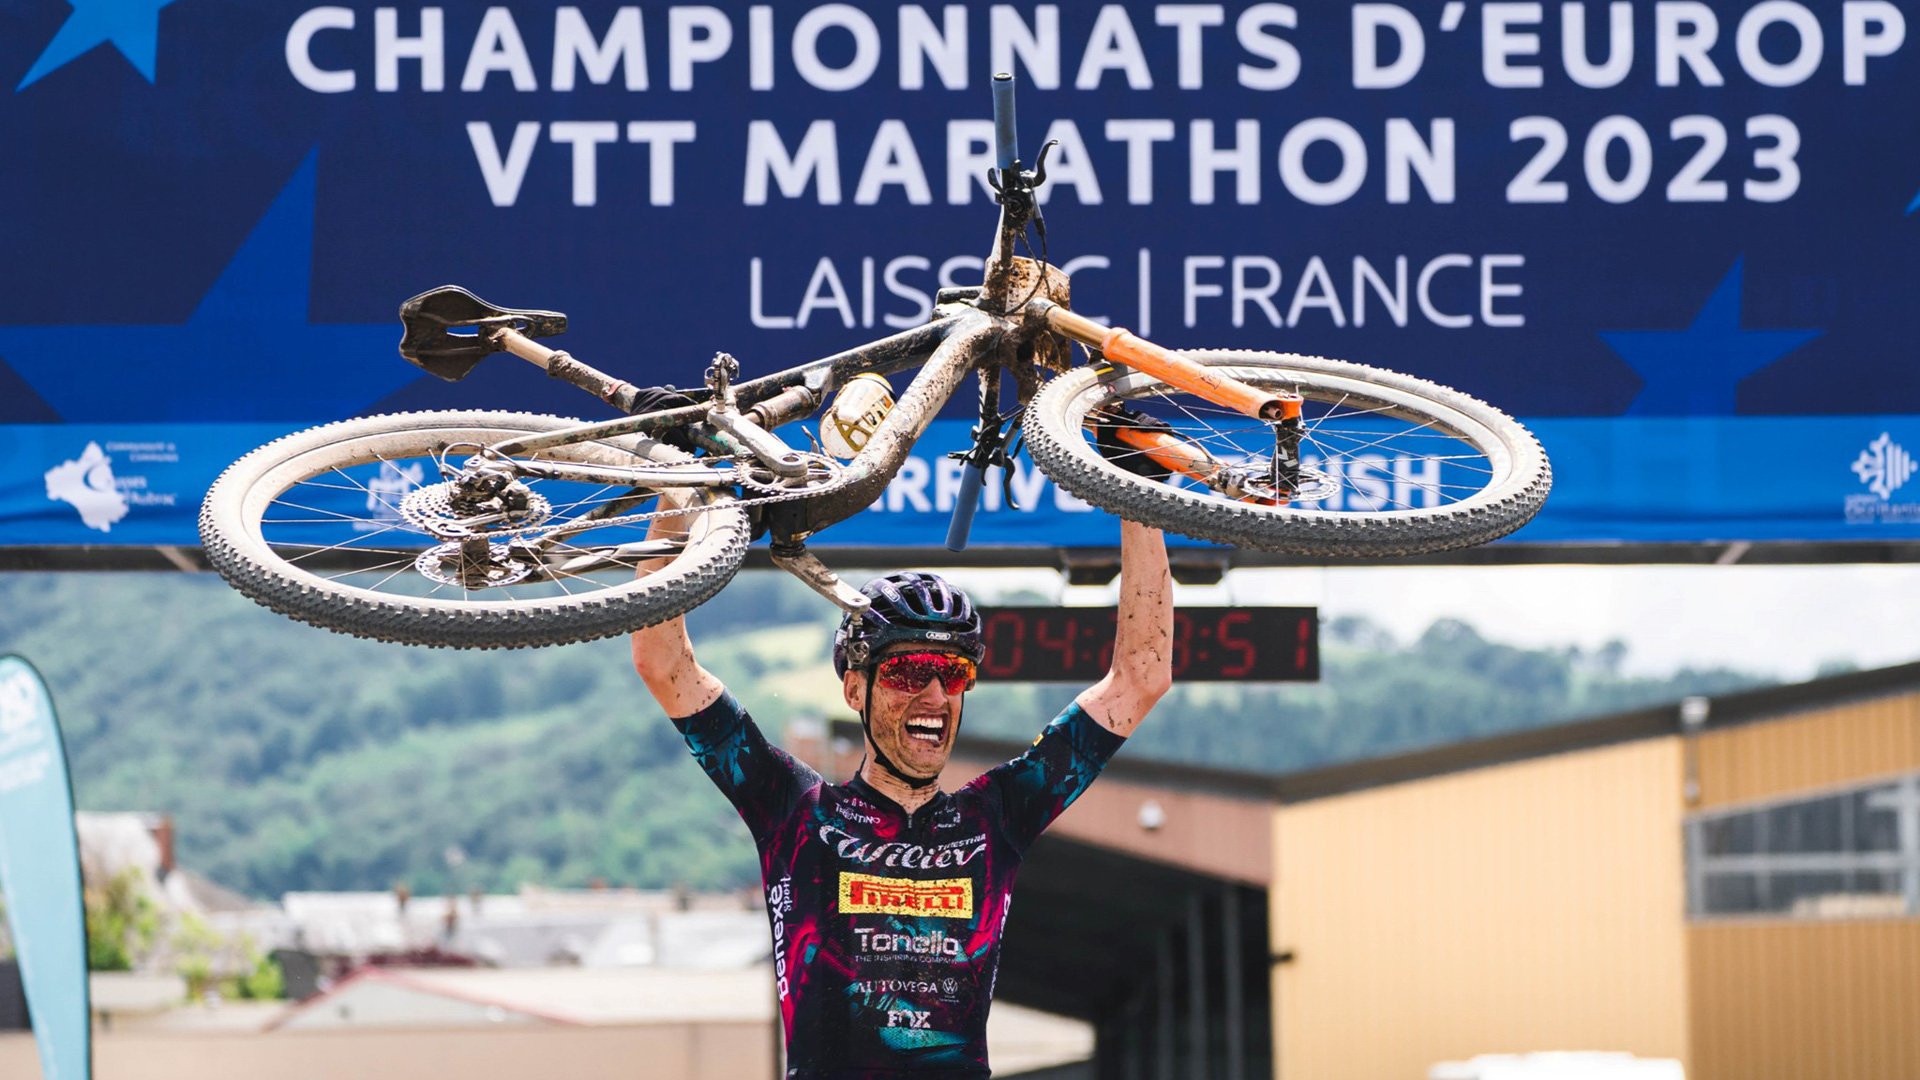 La vittoriosa staffetta Wilier - Pirelli nel campionato europeo marathon